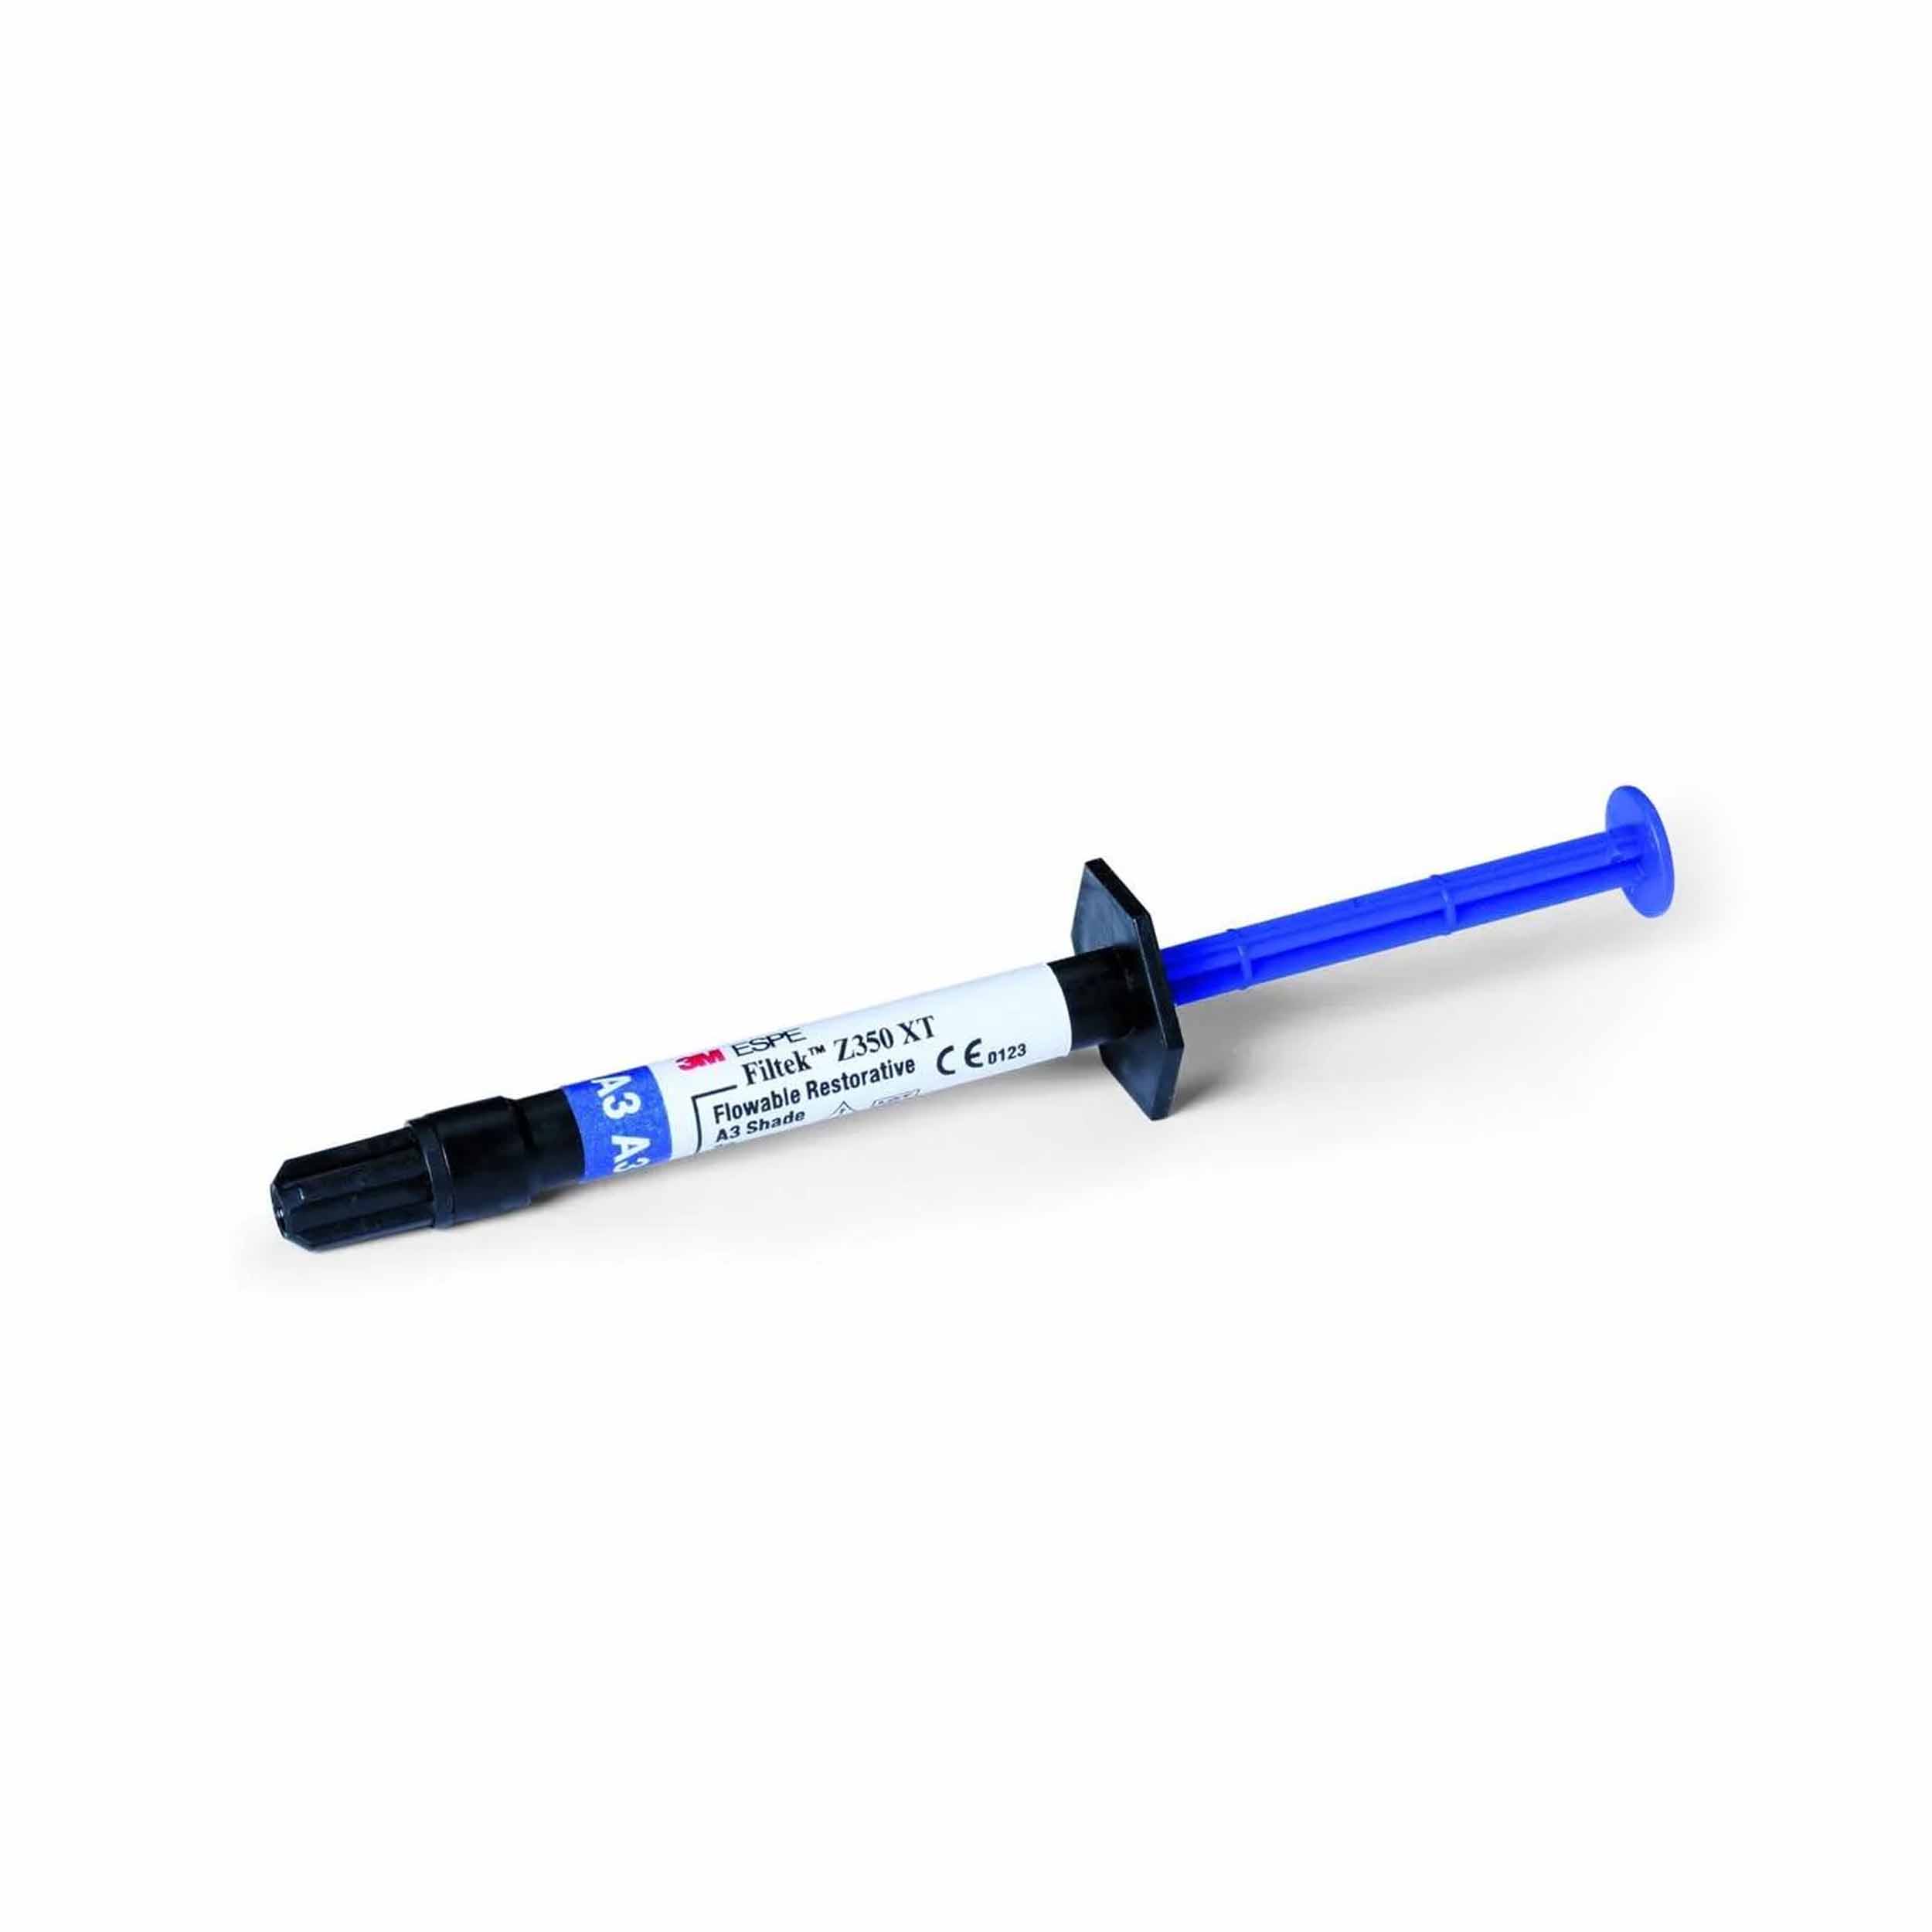 3m Espe Filtek Z350 Xt Universal Restorative Syringe Kit With Single Bond Universal Adhesive